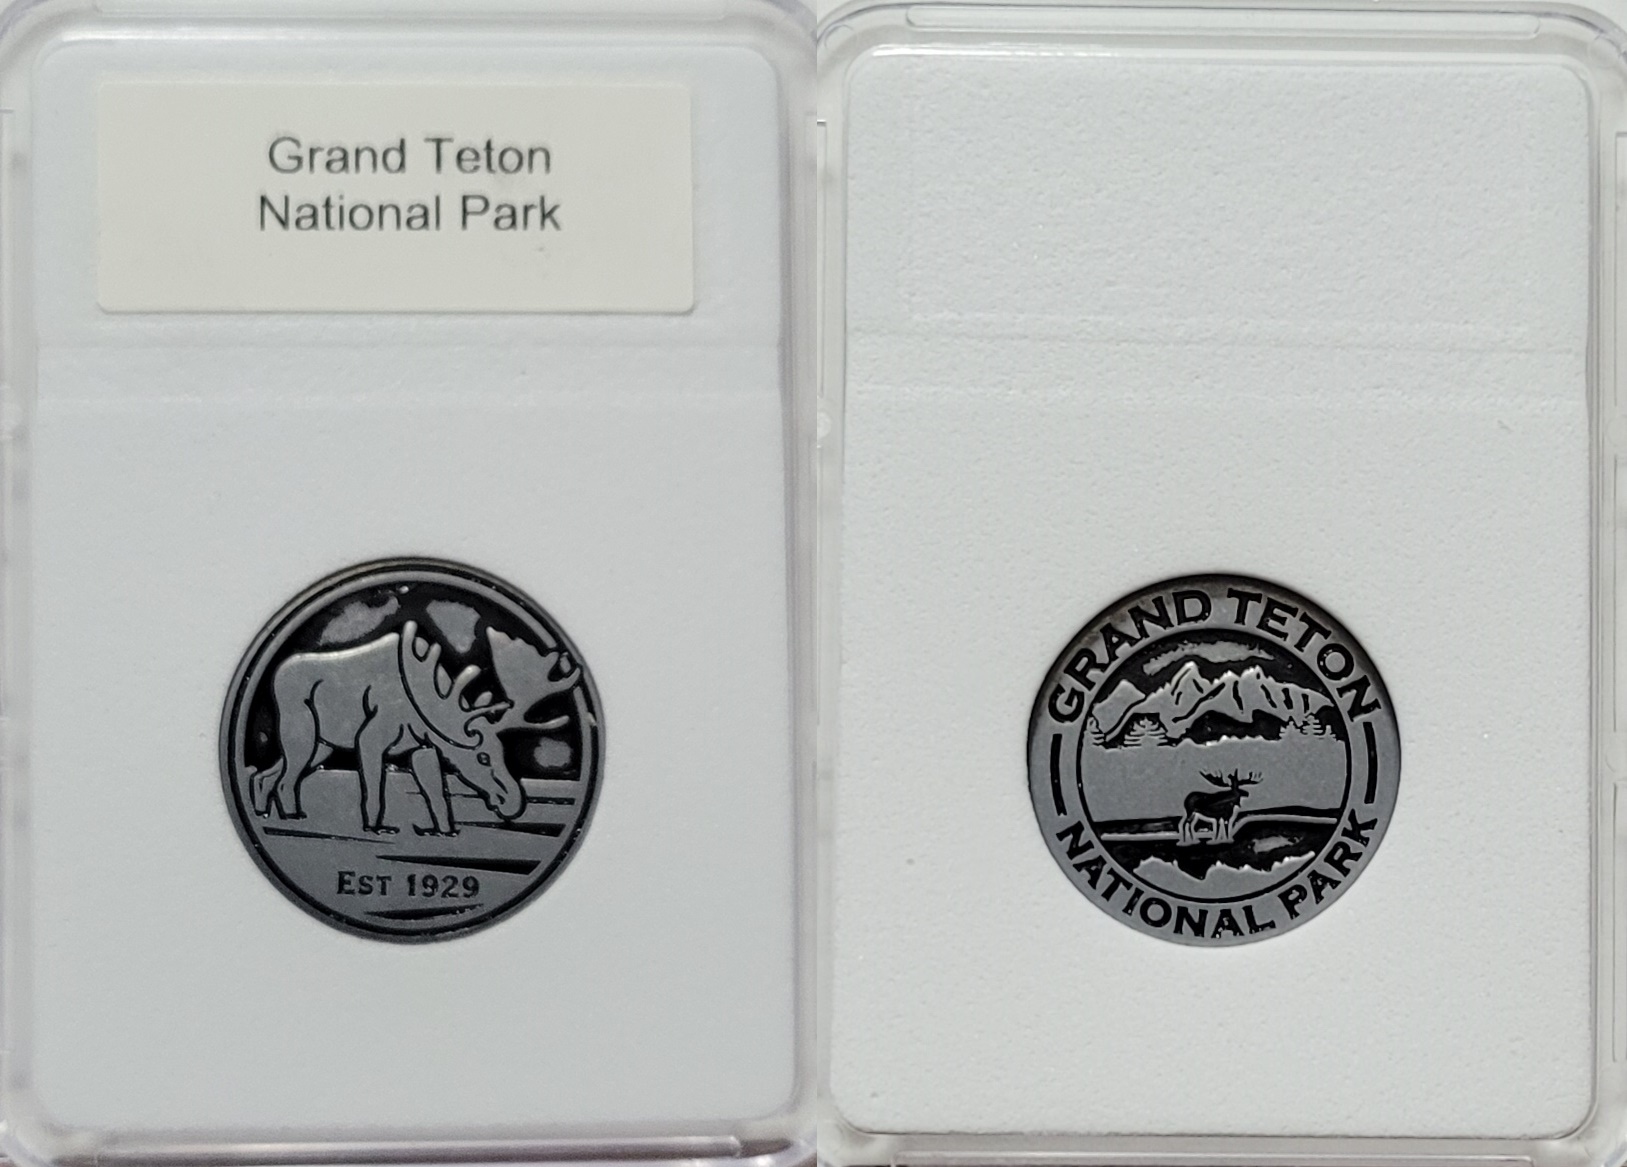 Grand Teton NP 1-horz.jpg